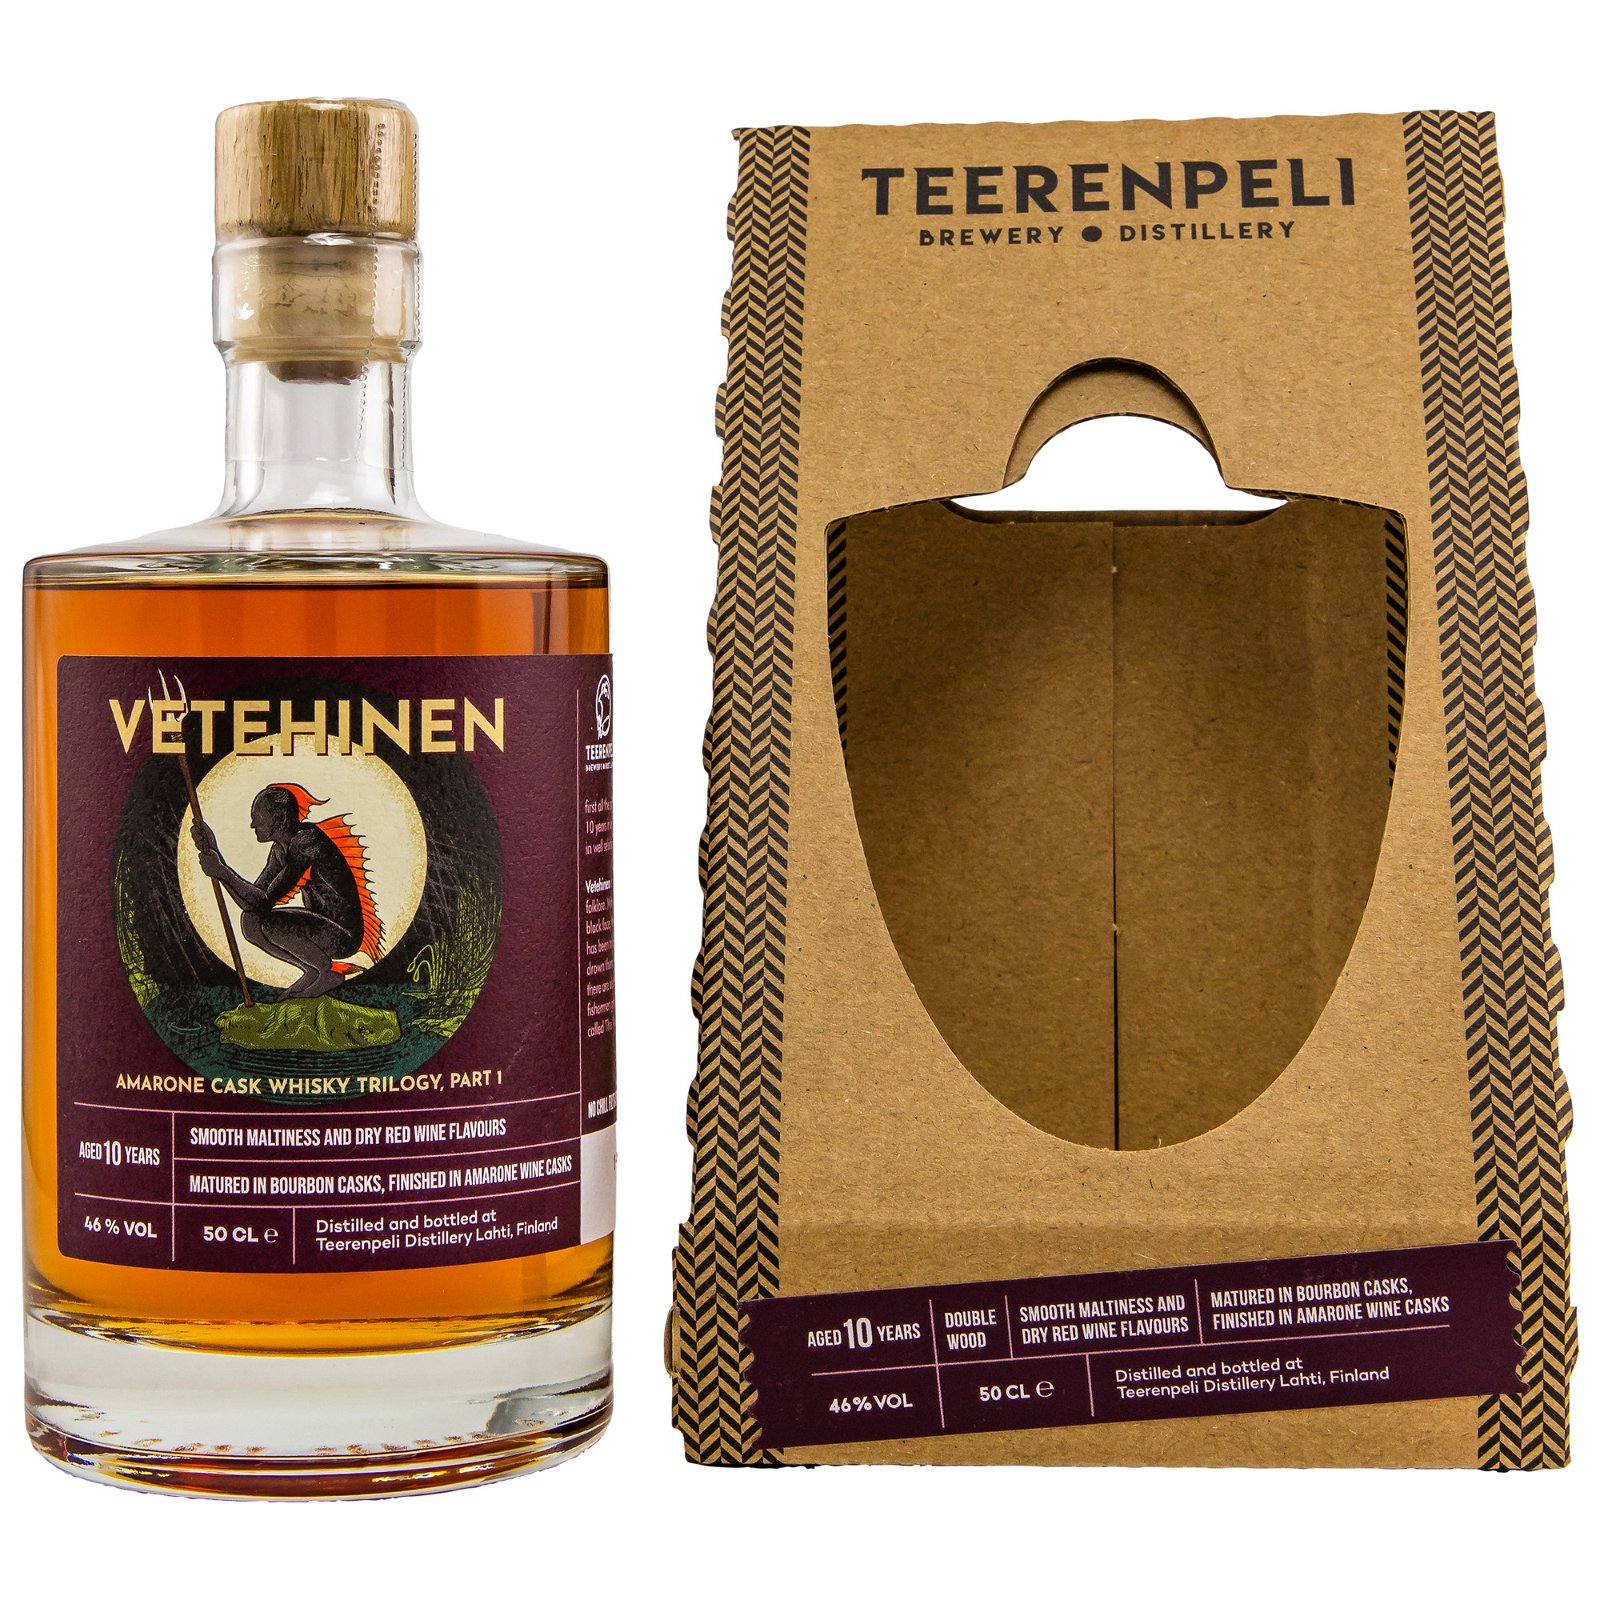 Teerenpeli 10 Jahre Vetehinen Amarone Cask Finish Whisky Trilogy, Part I